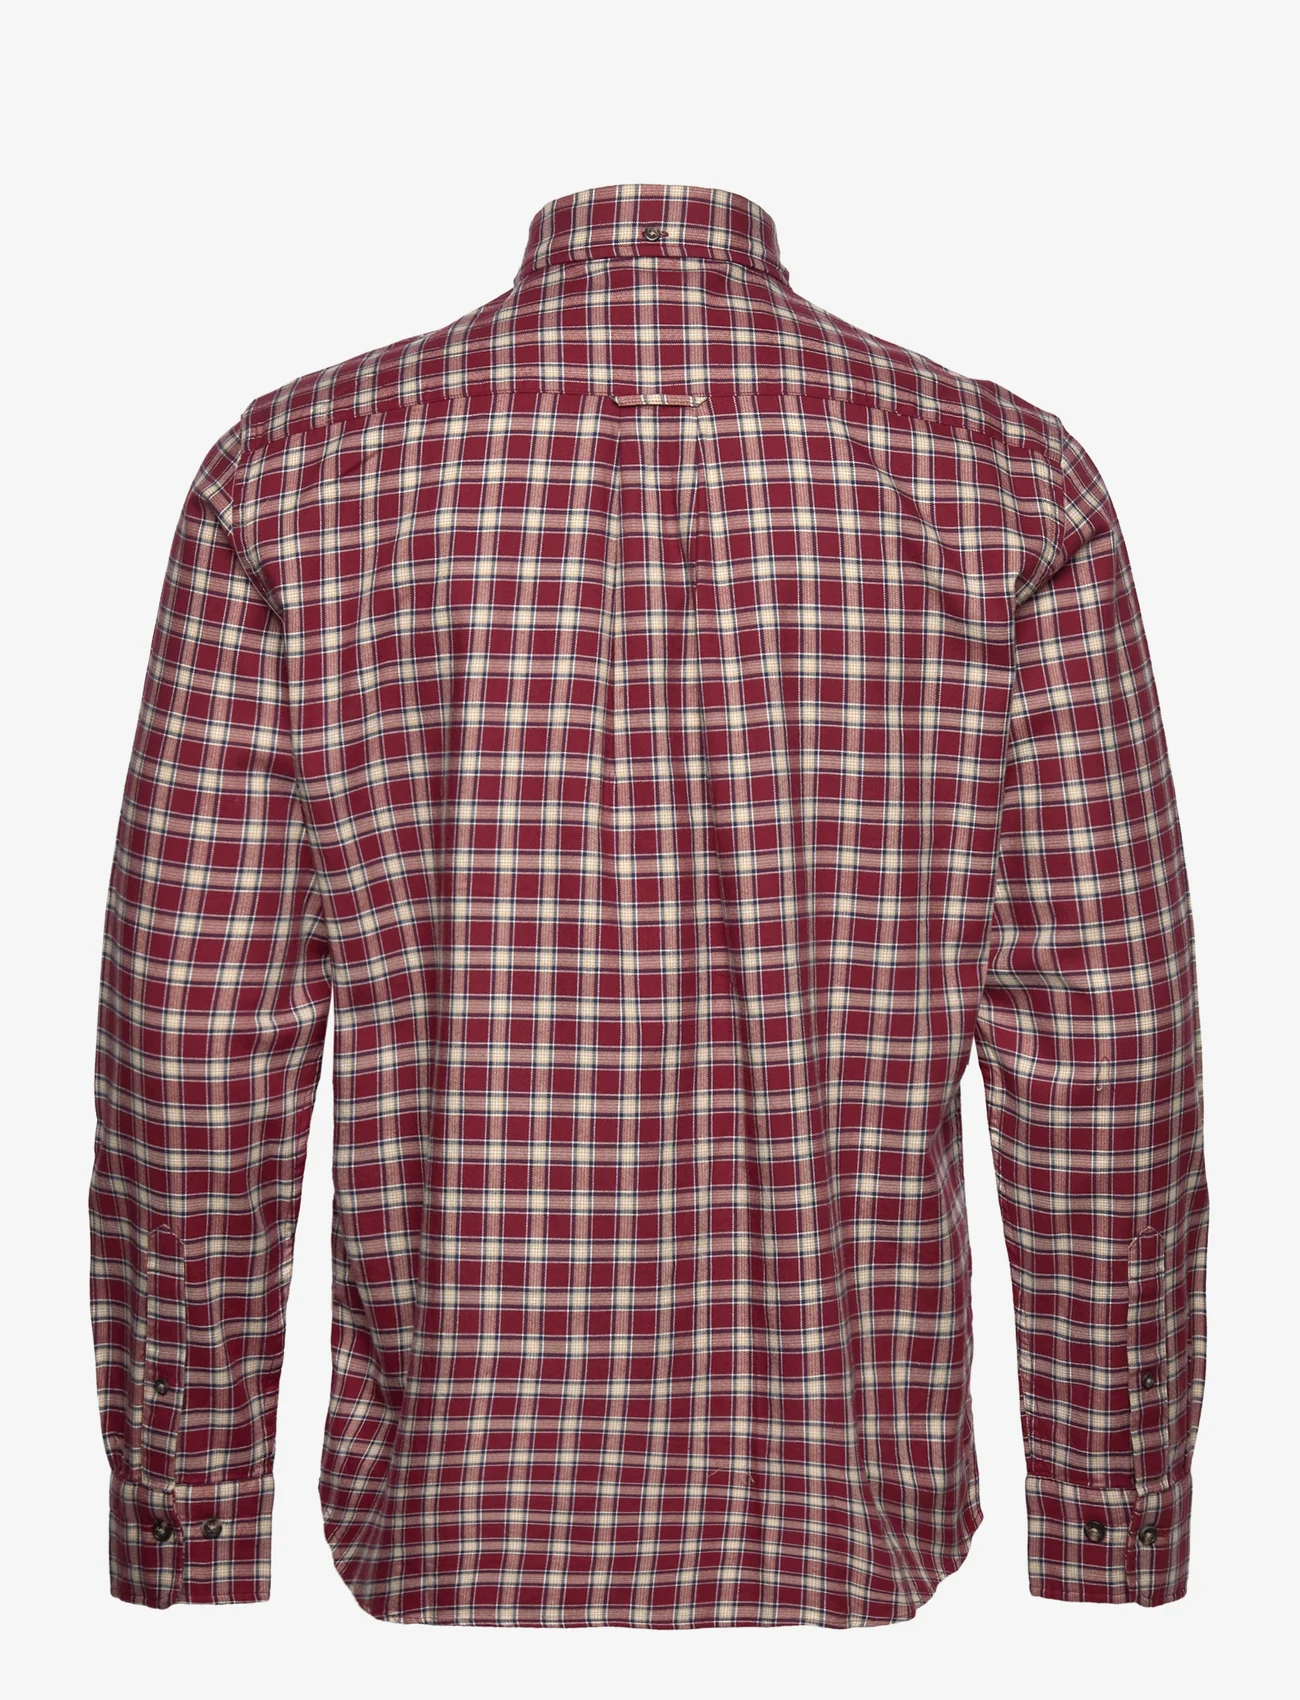 GANT - REG MICRO TARTAN FLANNEL SHIRT - checkered shirts - plumped red - 1